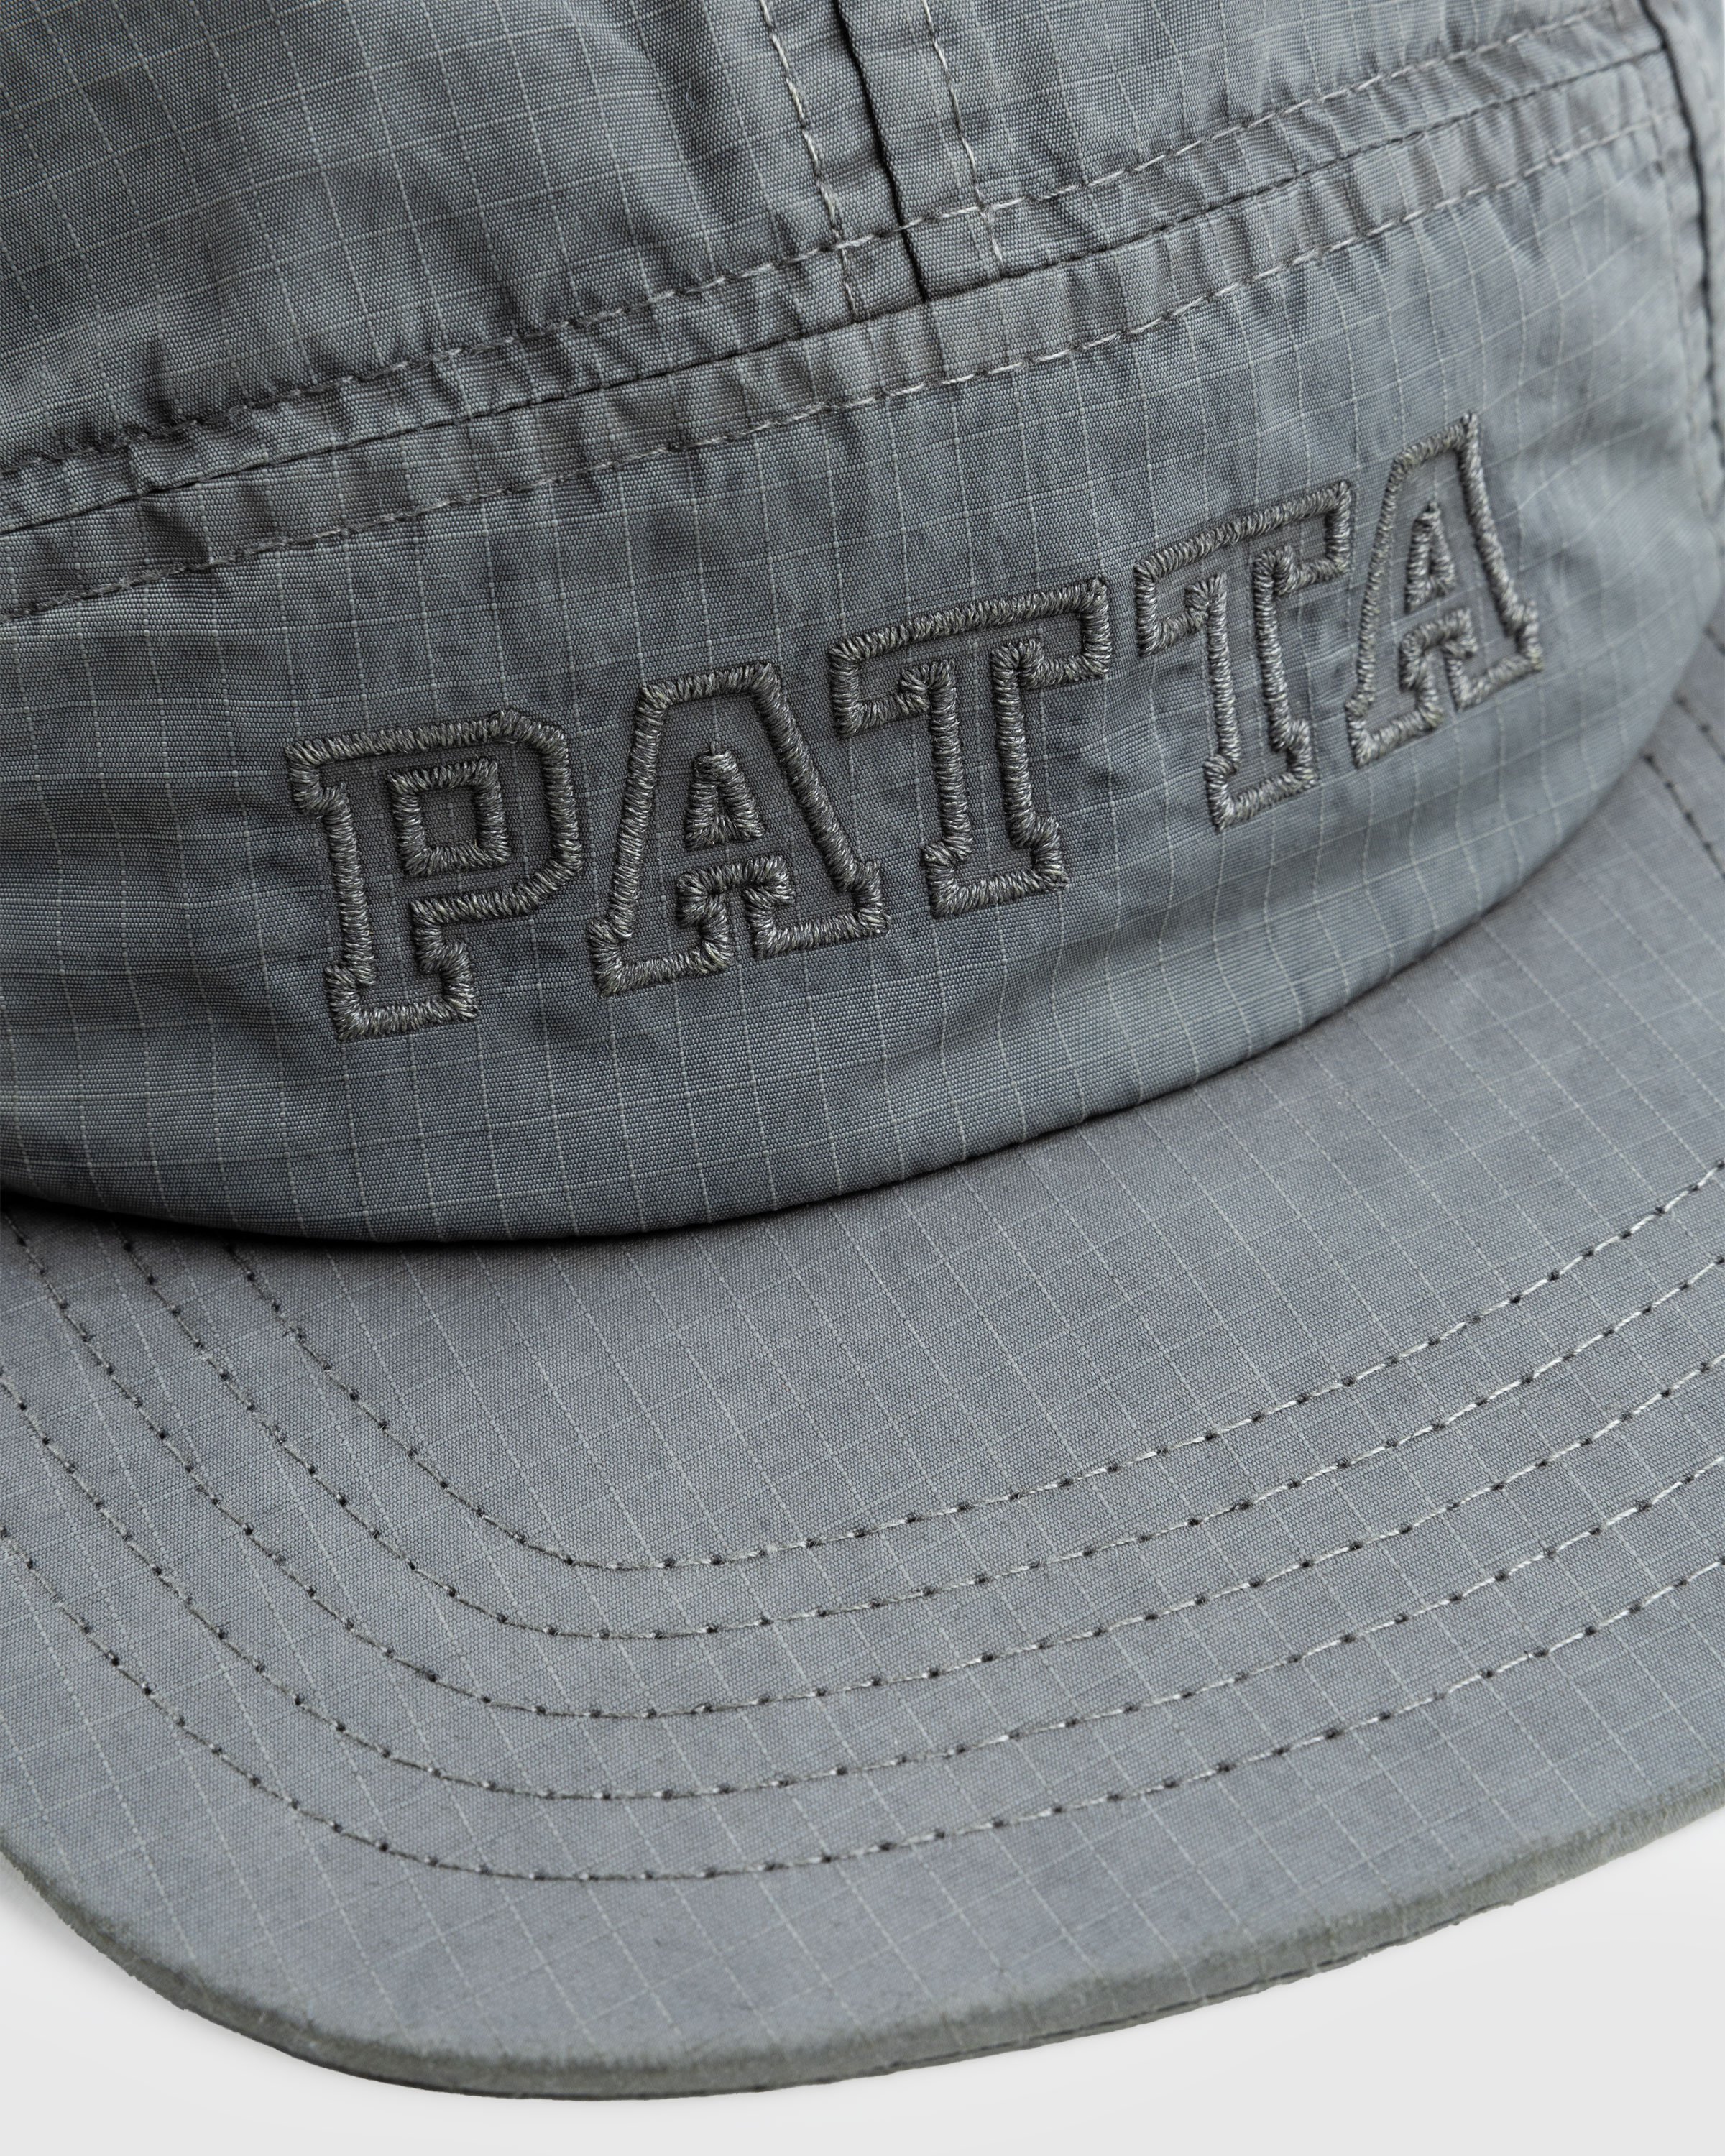 Patta - GARMENT DYE NYLON 5-PANEL CAP Green - Accessories - Green - Image 4